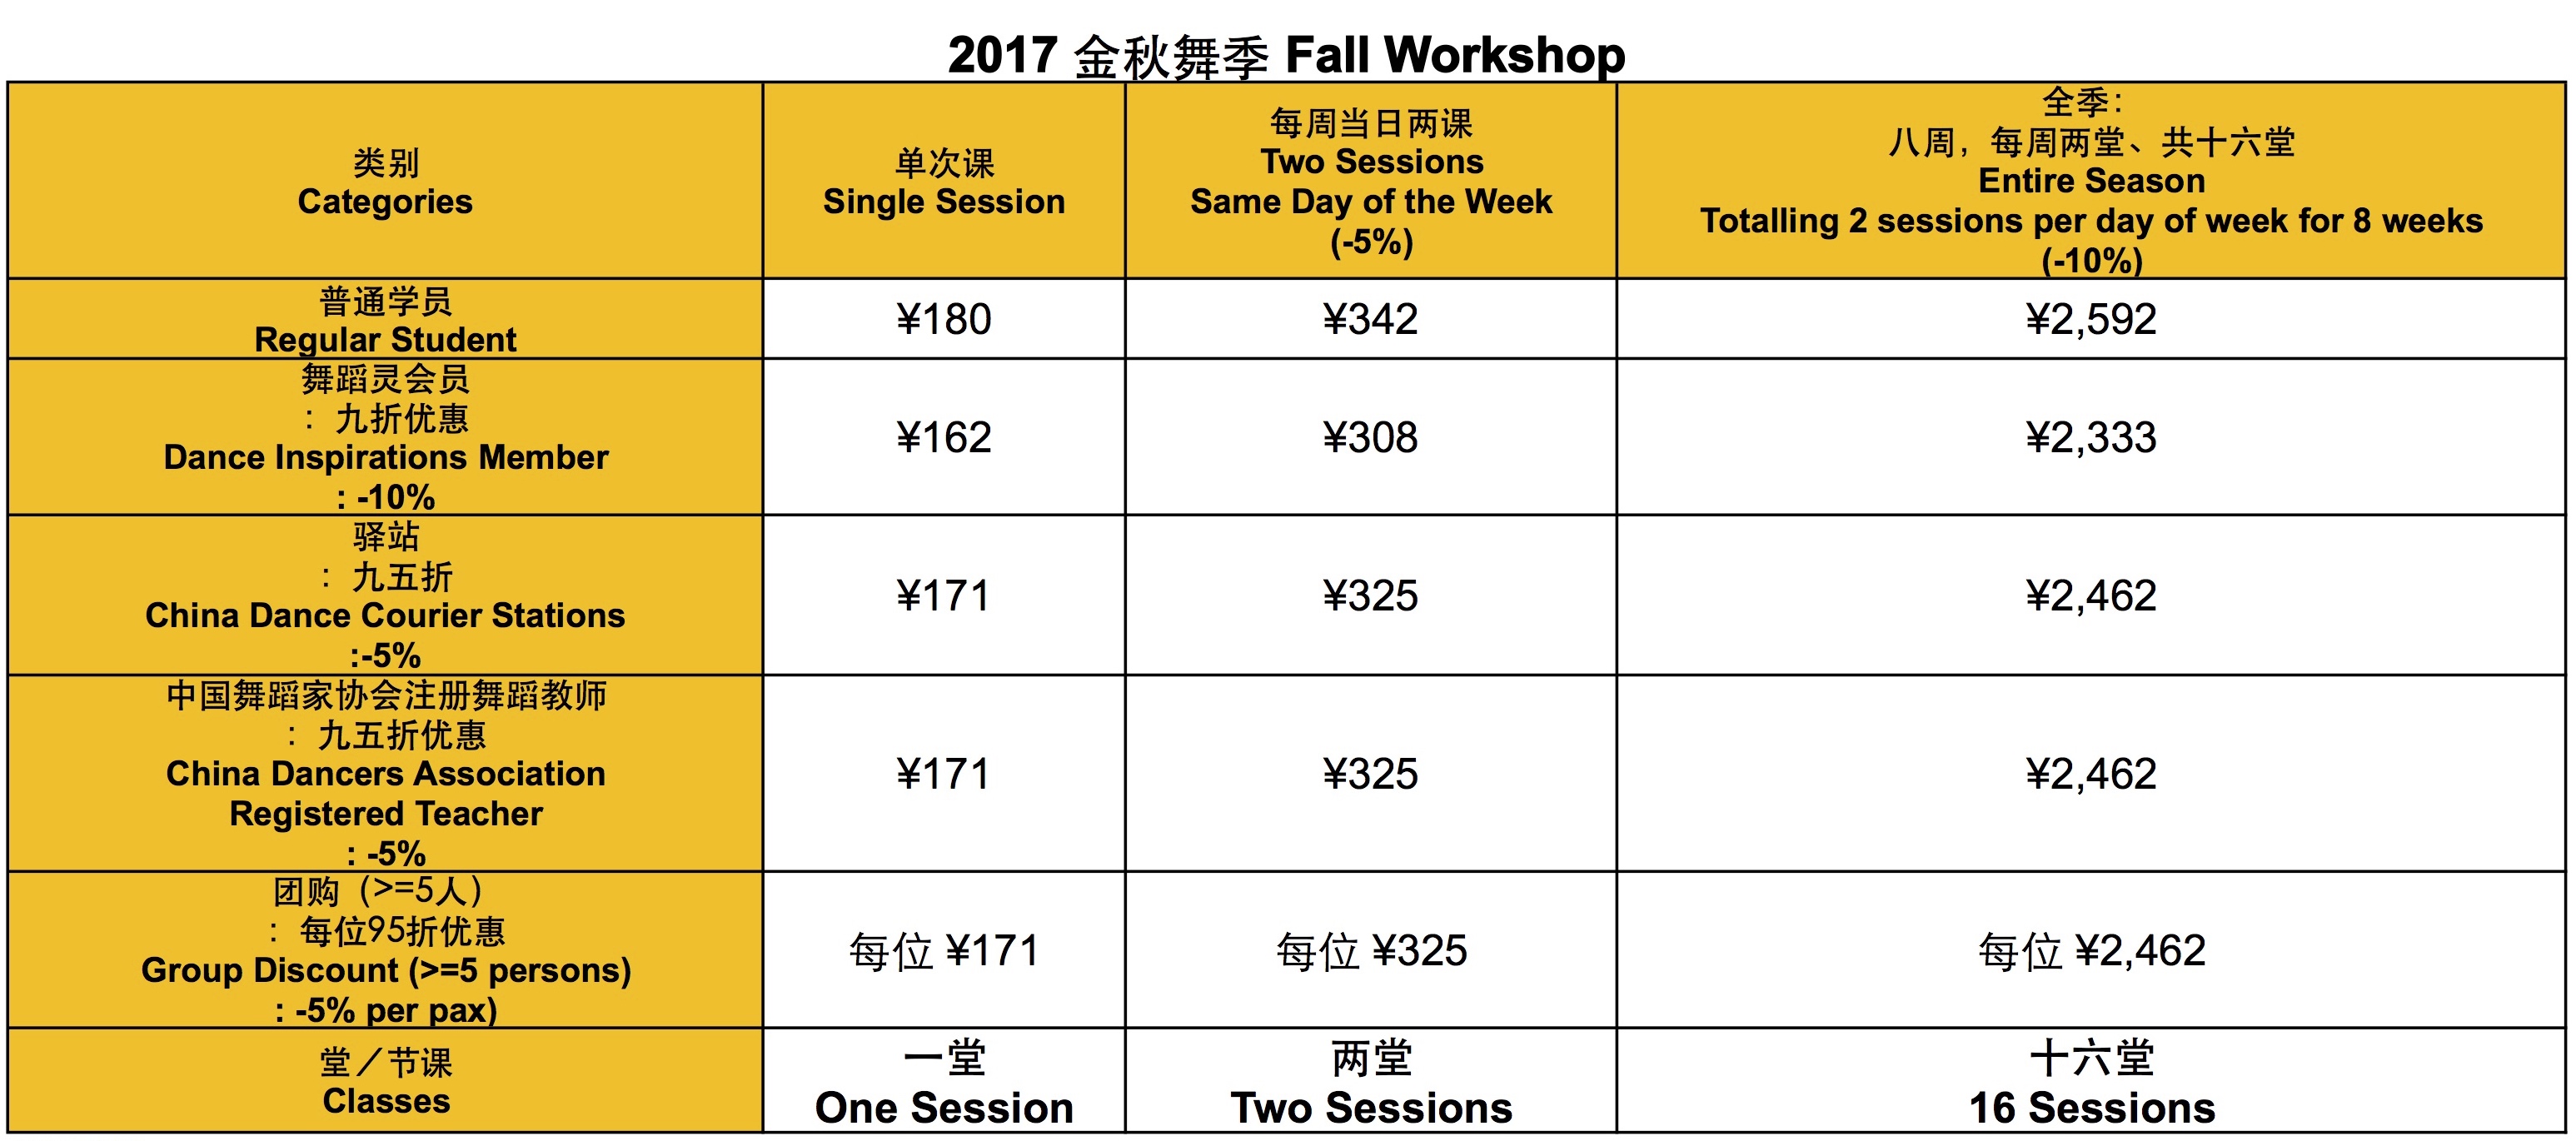 Workshop_Fall-2017_$_09-29_Fotor.jpg